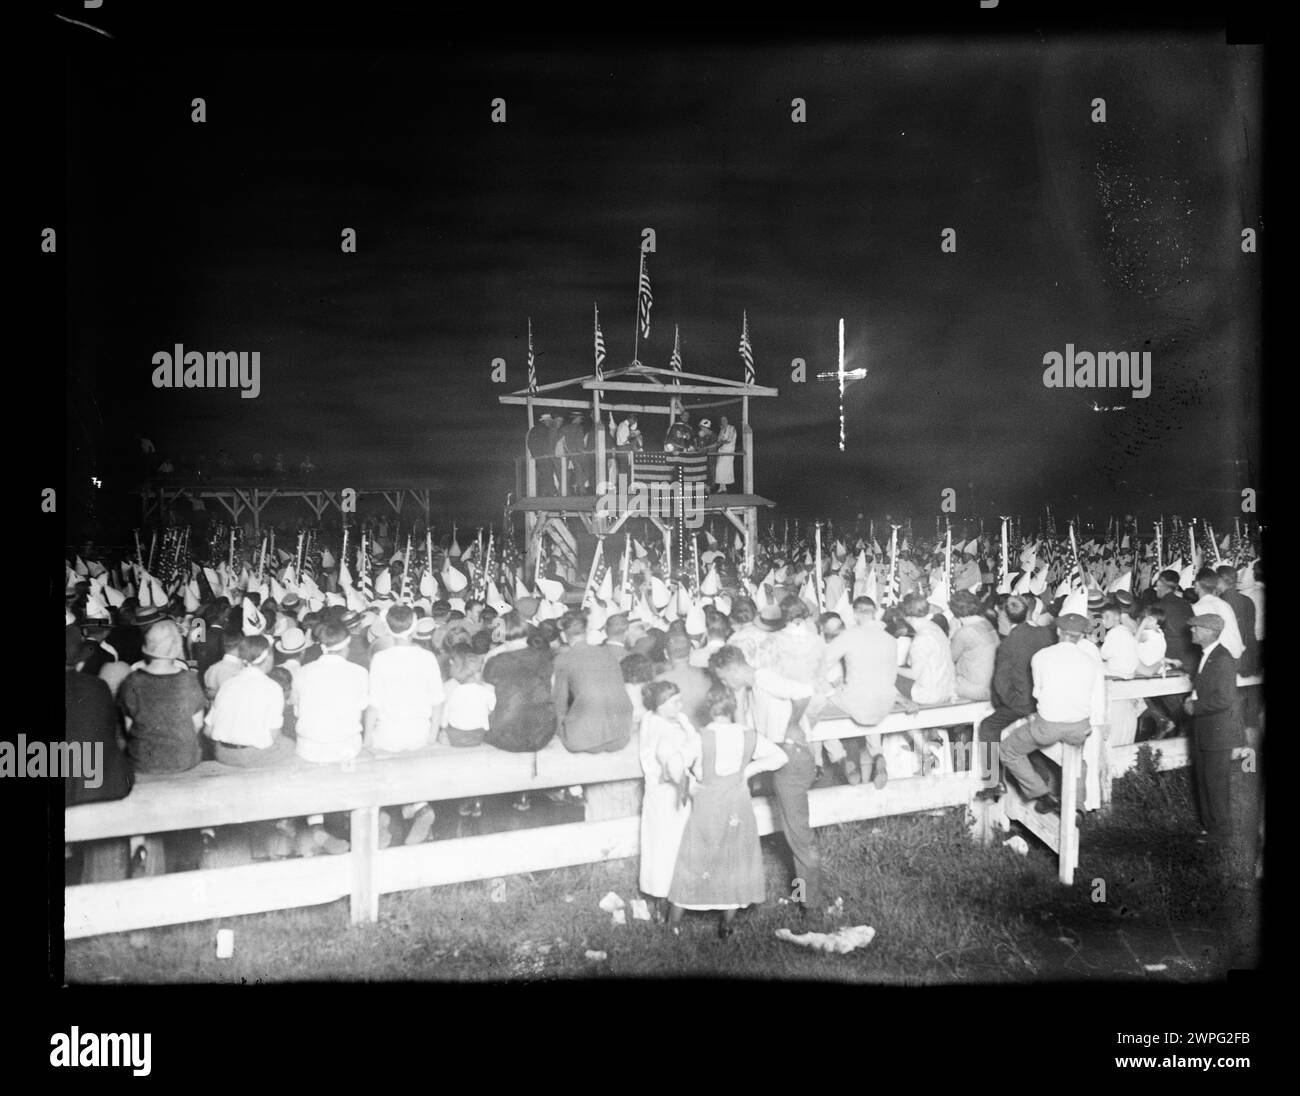 Cross burning, Ku Klux Klan 1925, Southern USA Stock Photo